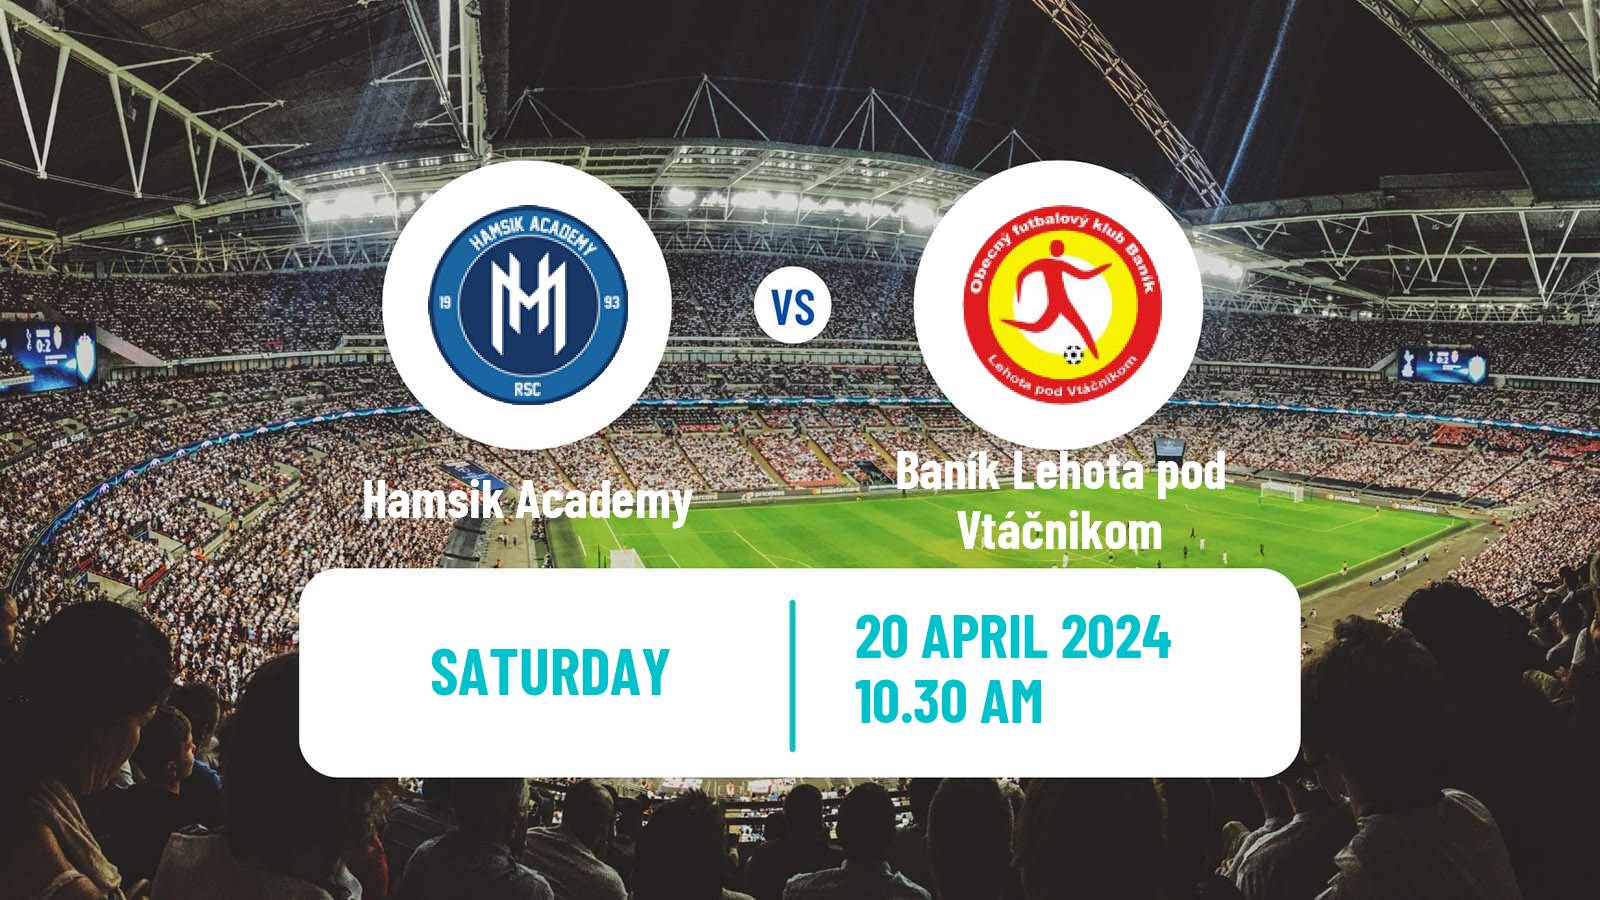 Soccer Slovak 3 Liga West Hamsik Academy - Baník Lehota pod Vtáčnikom